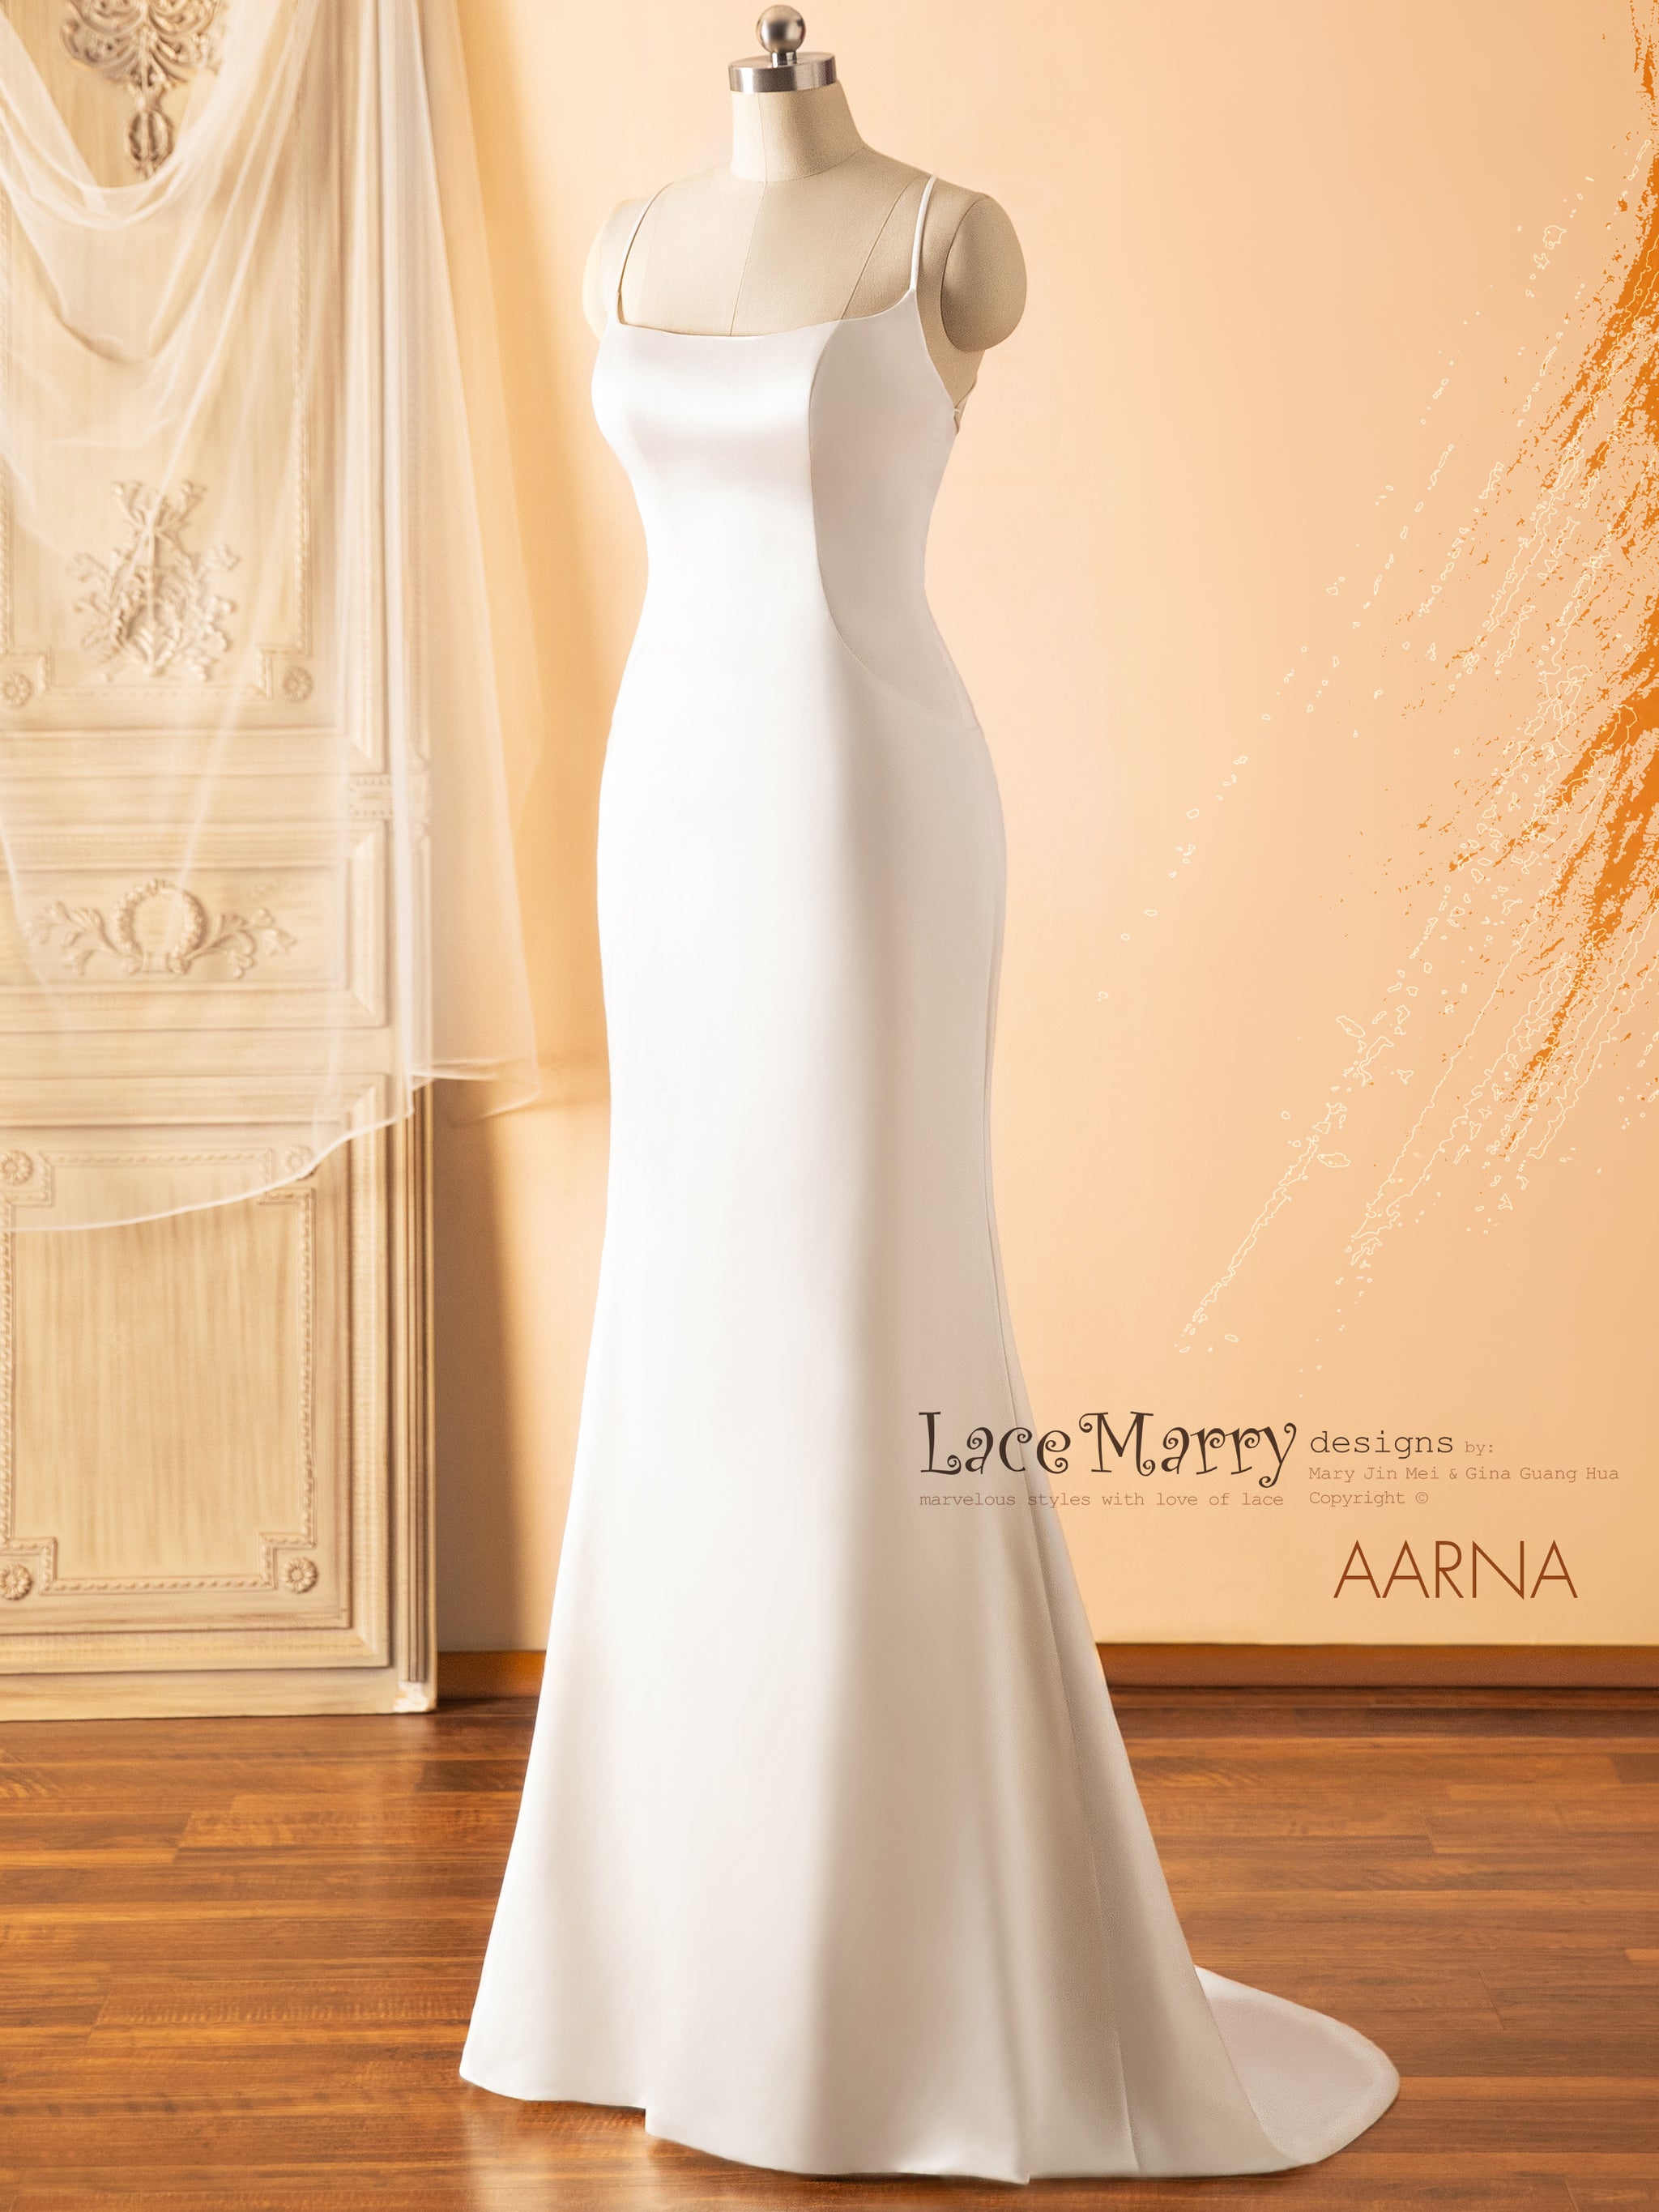 Most popular wedding dress styles 2023 - Leah S Designs